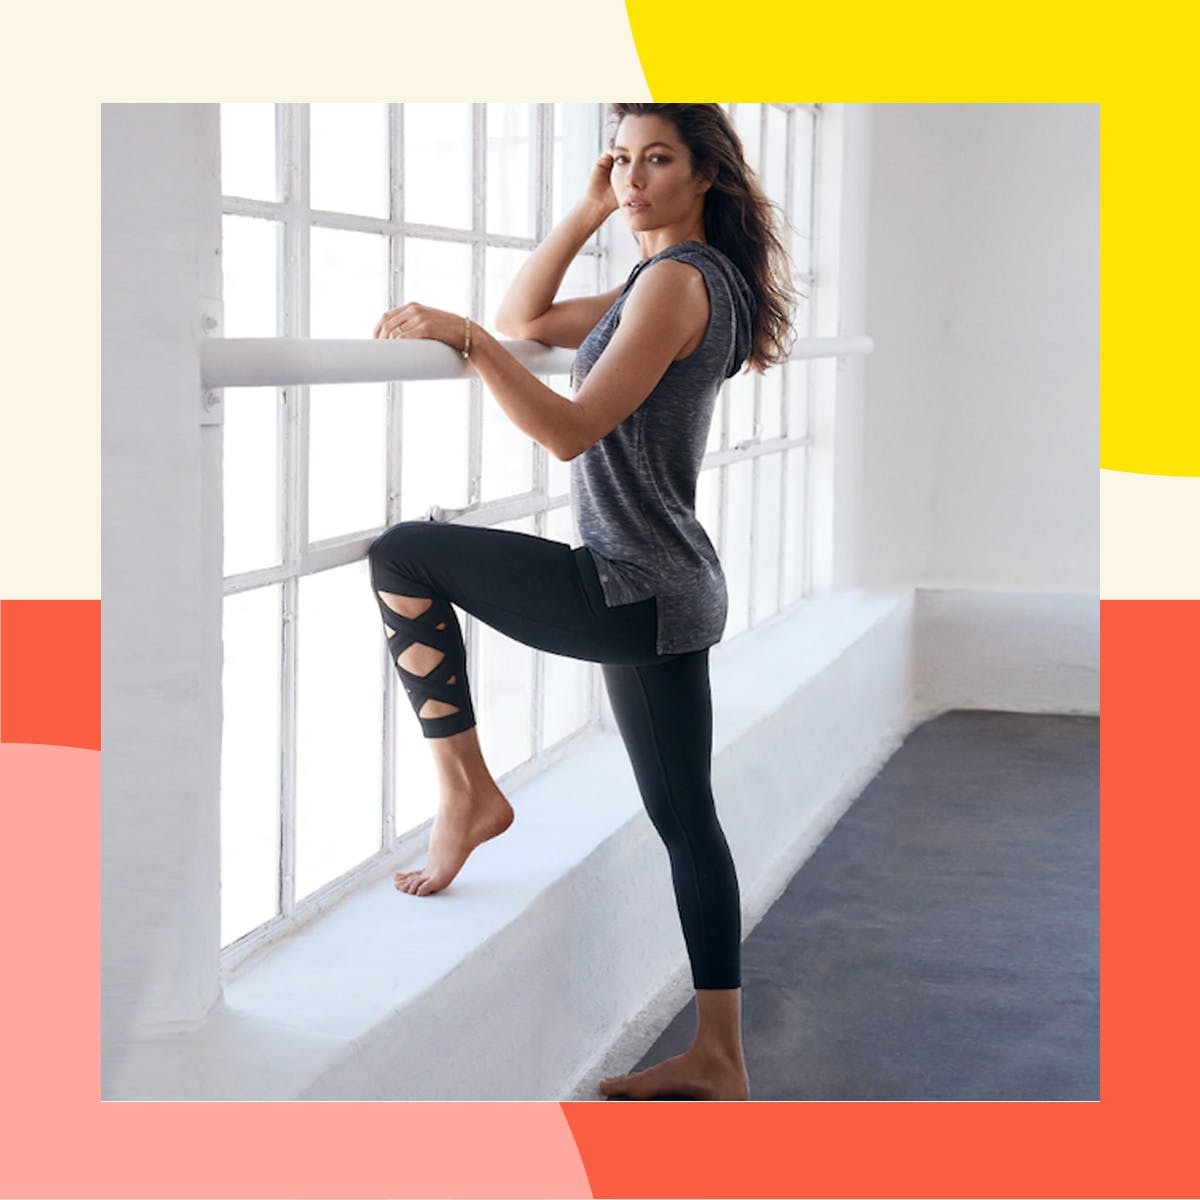 Jessica Biel + @gaiam yoga outfit